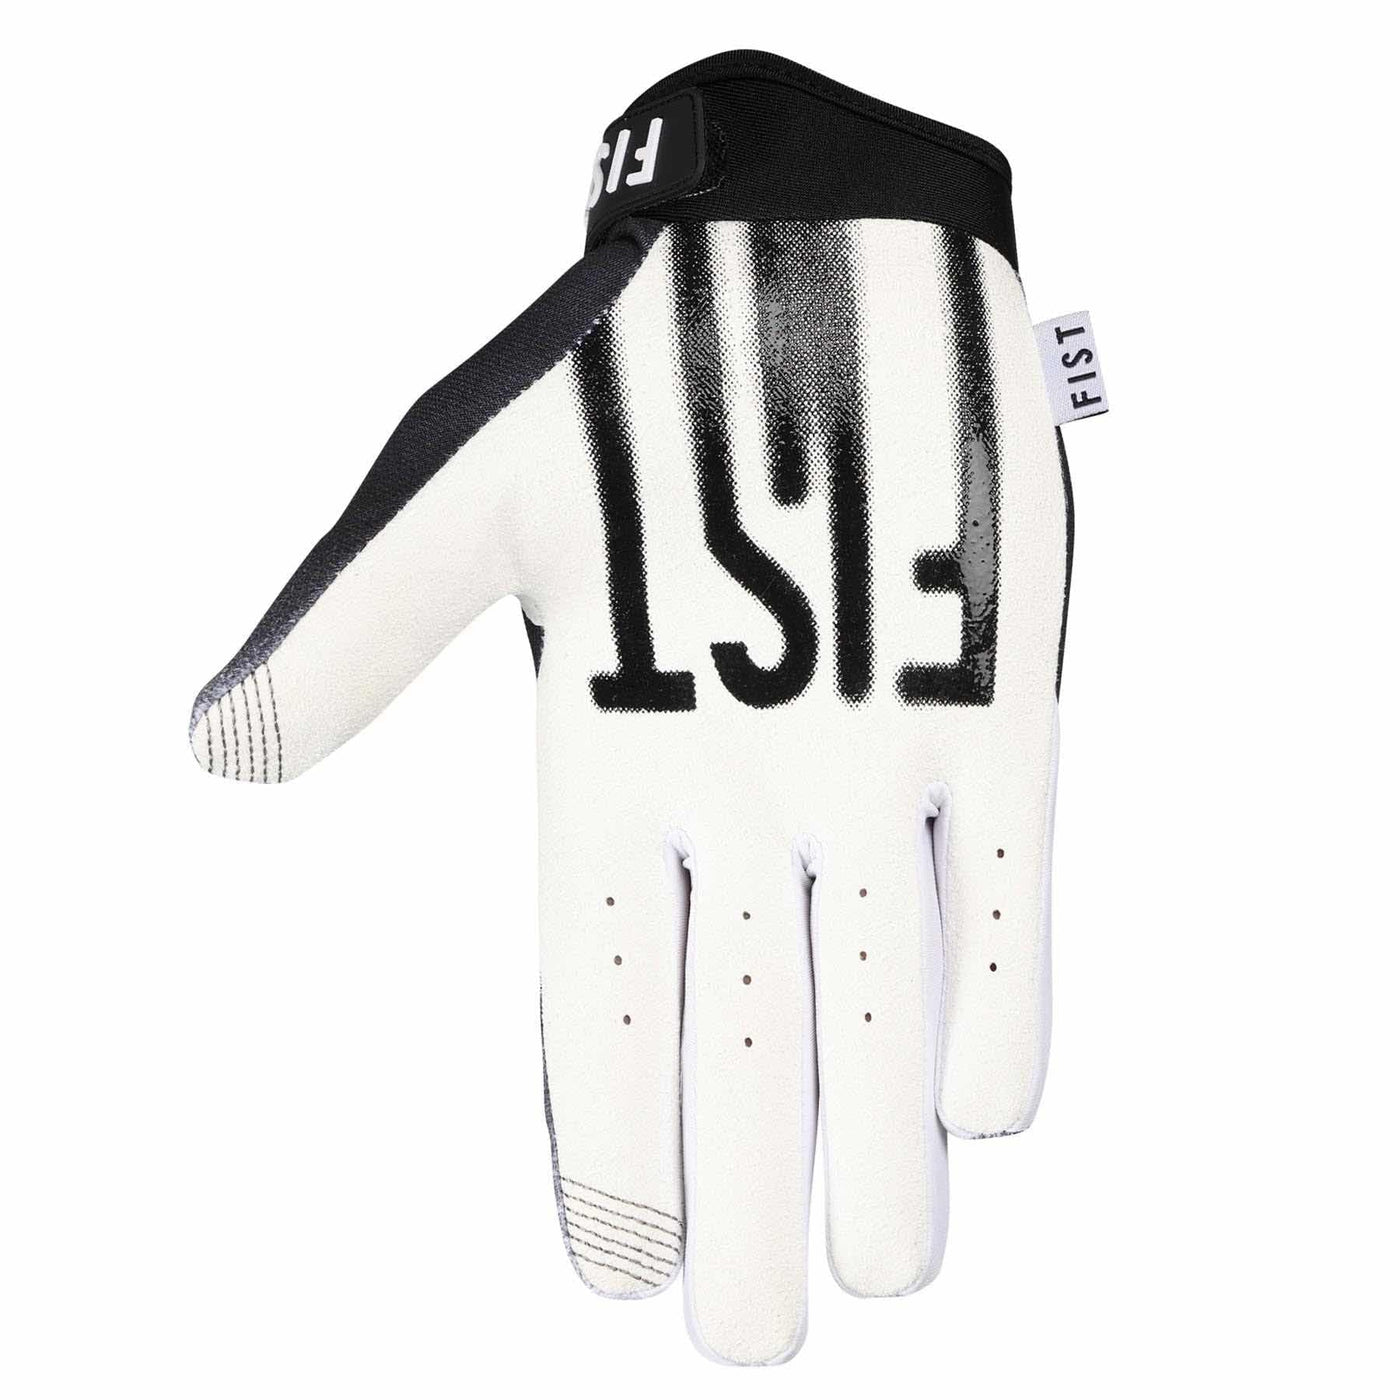 FIST Gloves - Blur palm | 8Lines.eu - Next day shipping, Best Offers